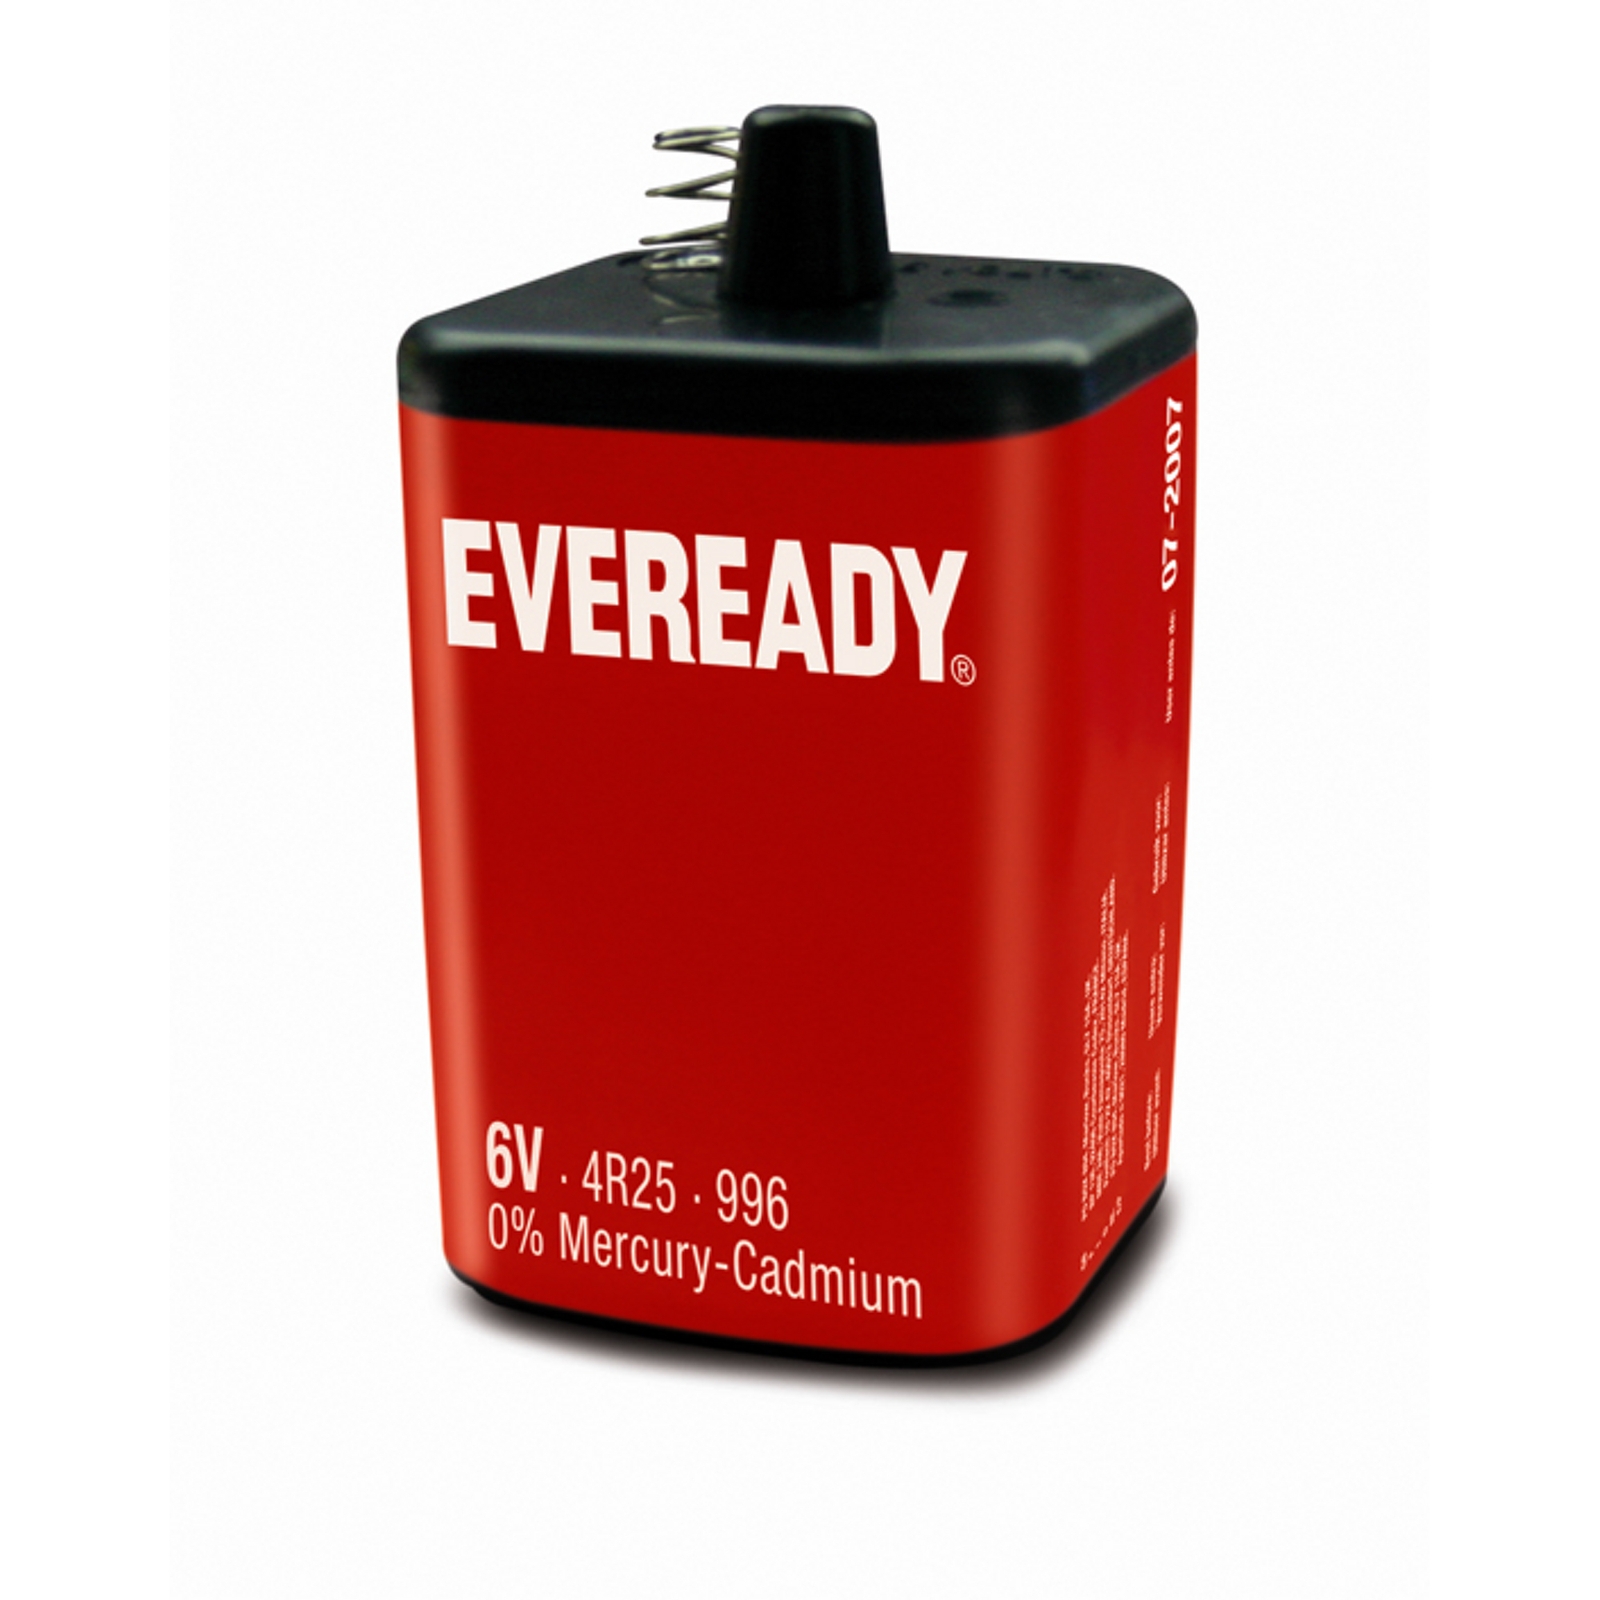 Eveready 6V Lantern Battery - Each